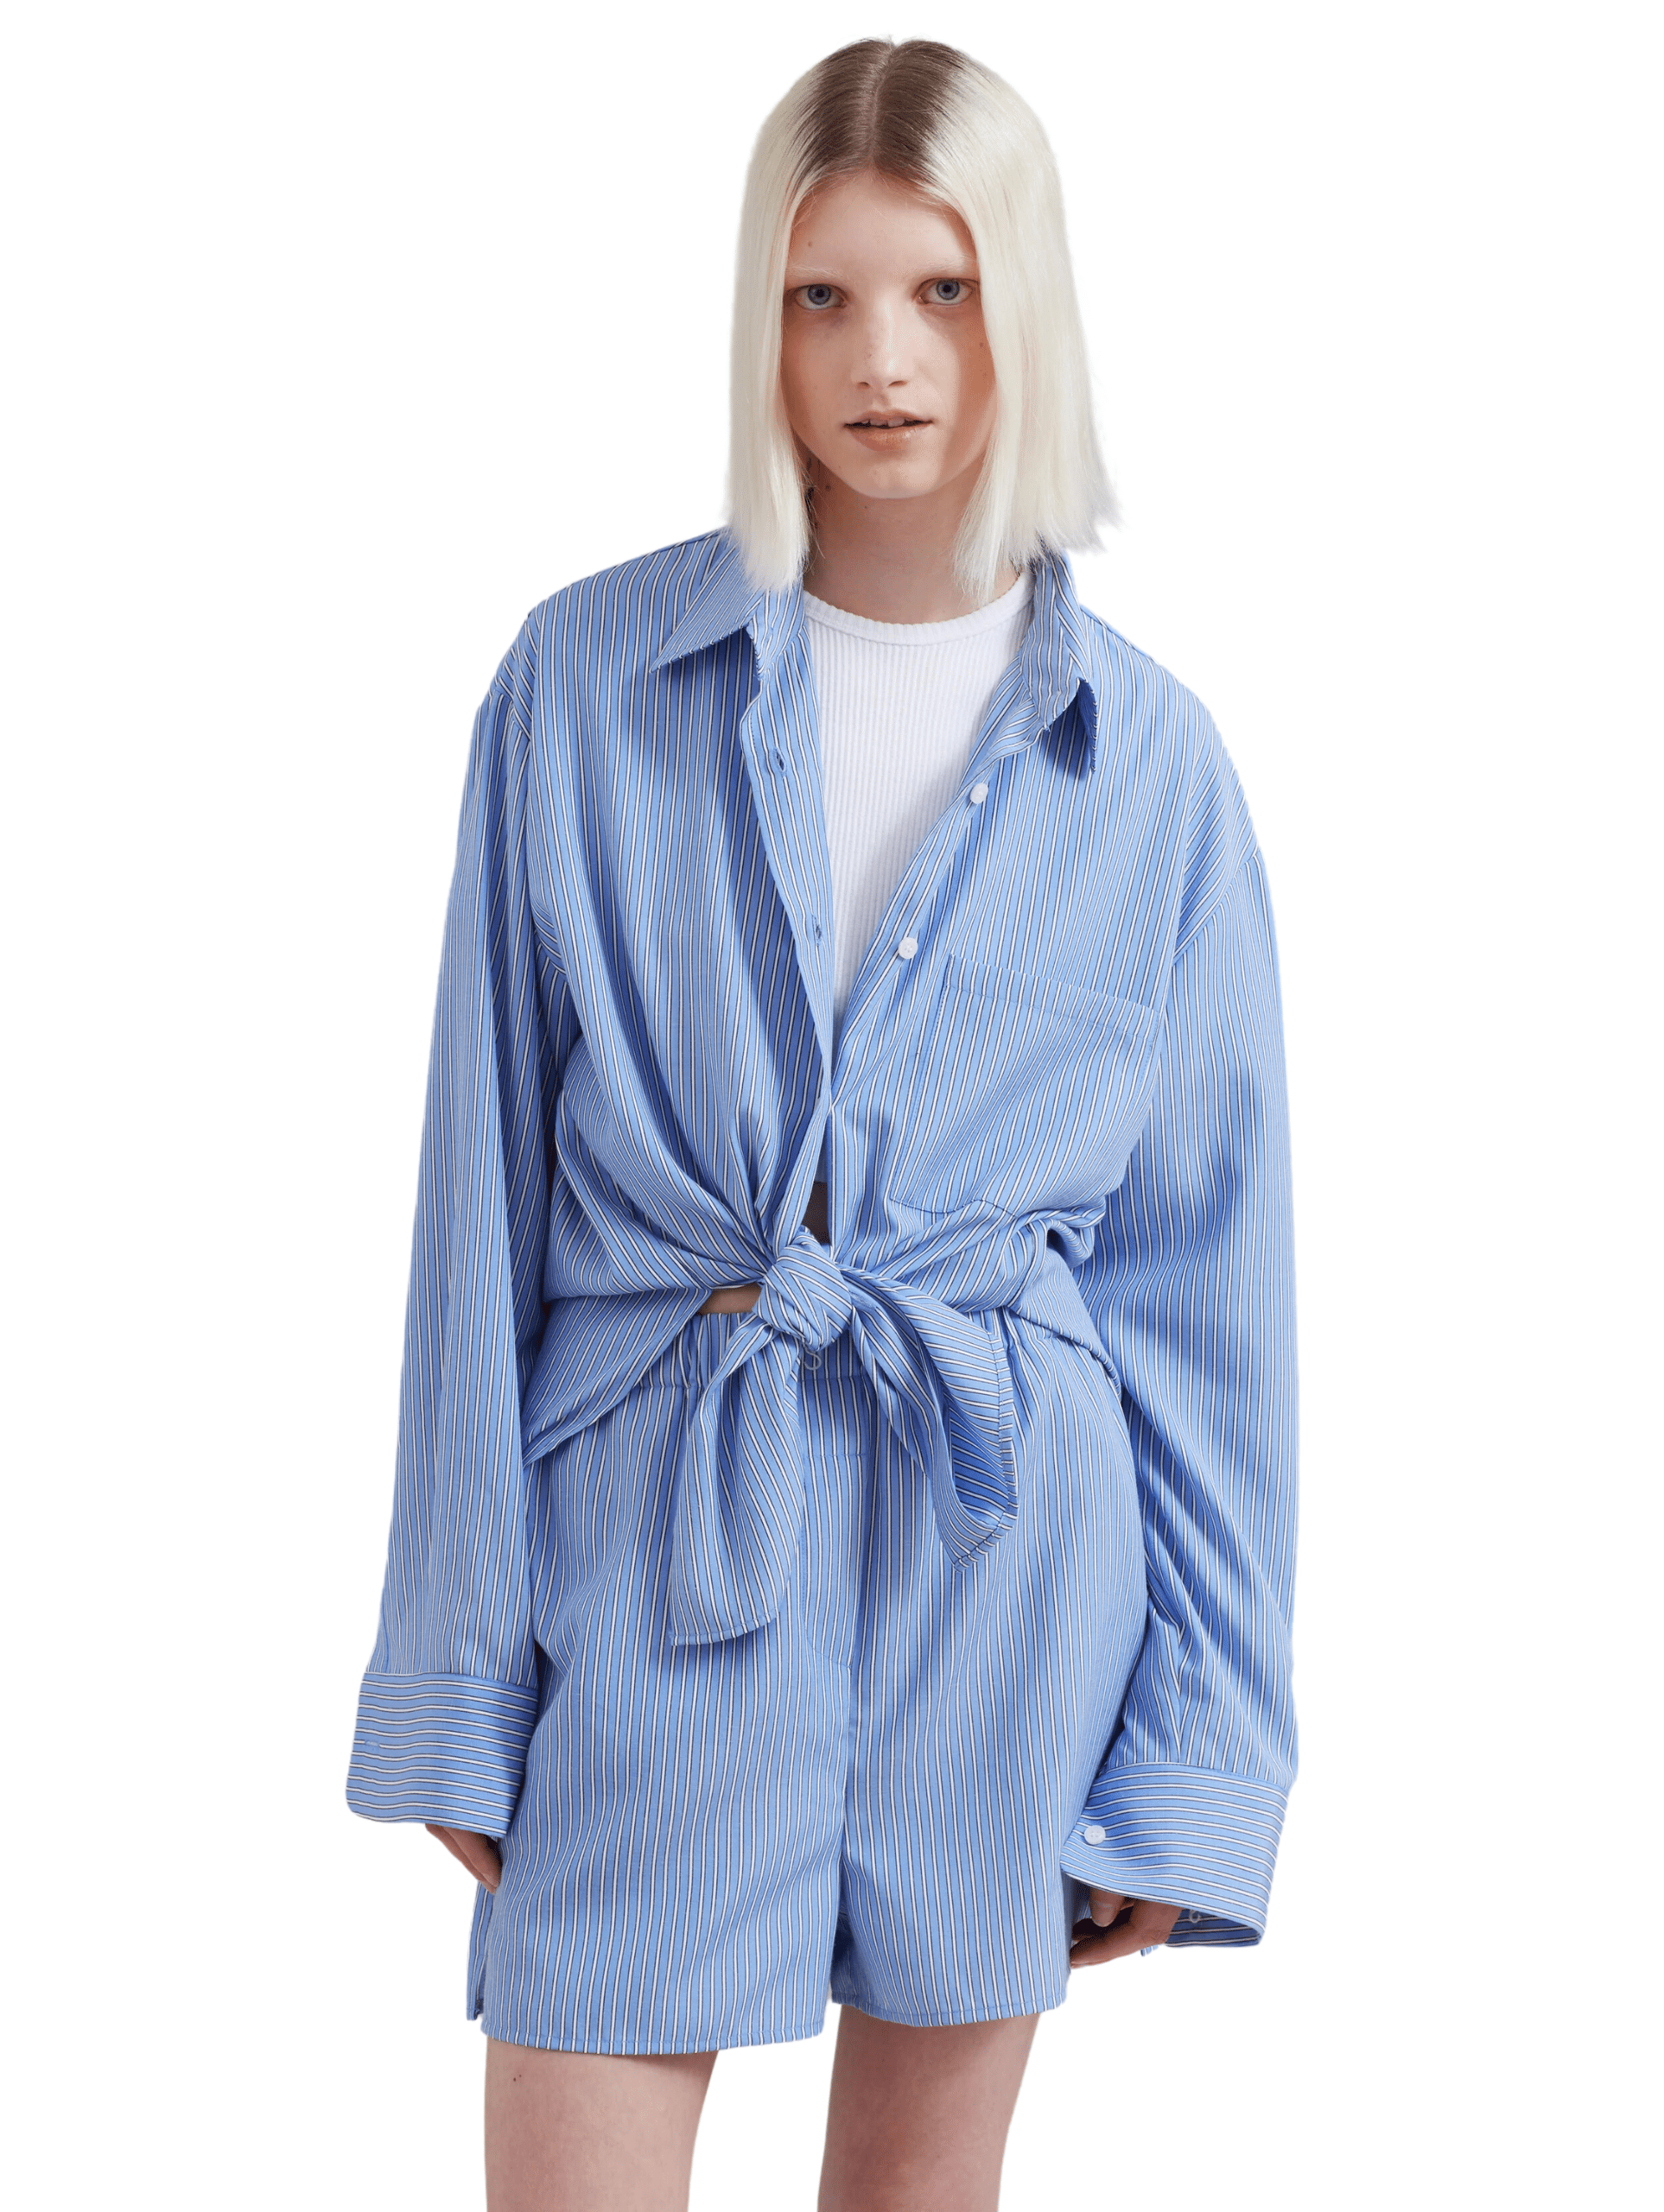 Lui Oxford Shirt / Light Blue & Black Stripe - Seletti Concept Store